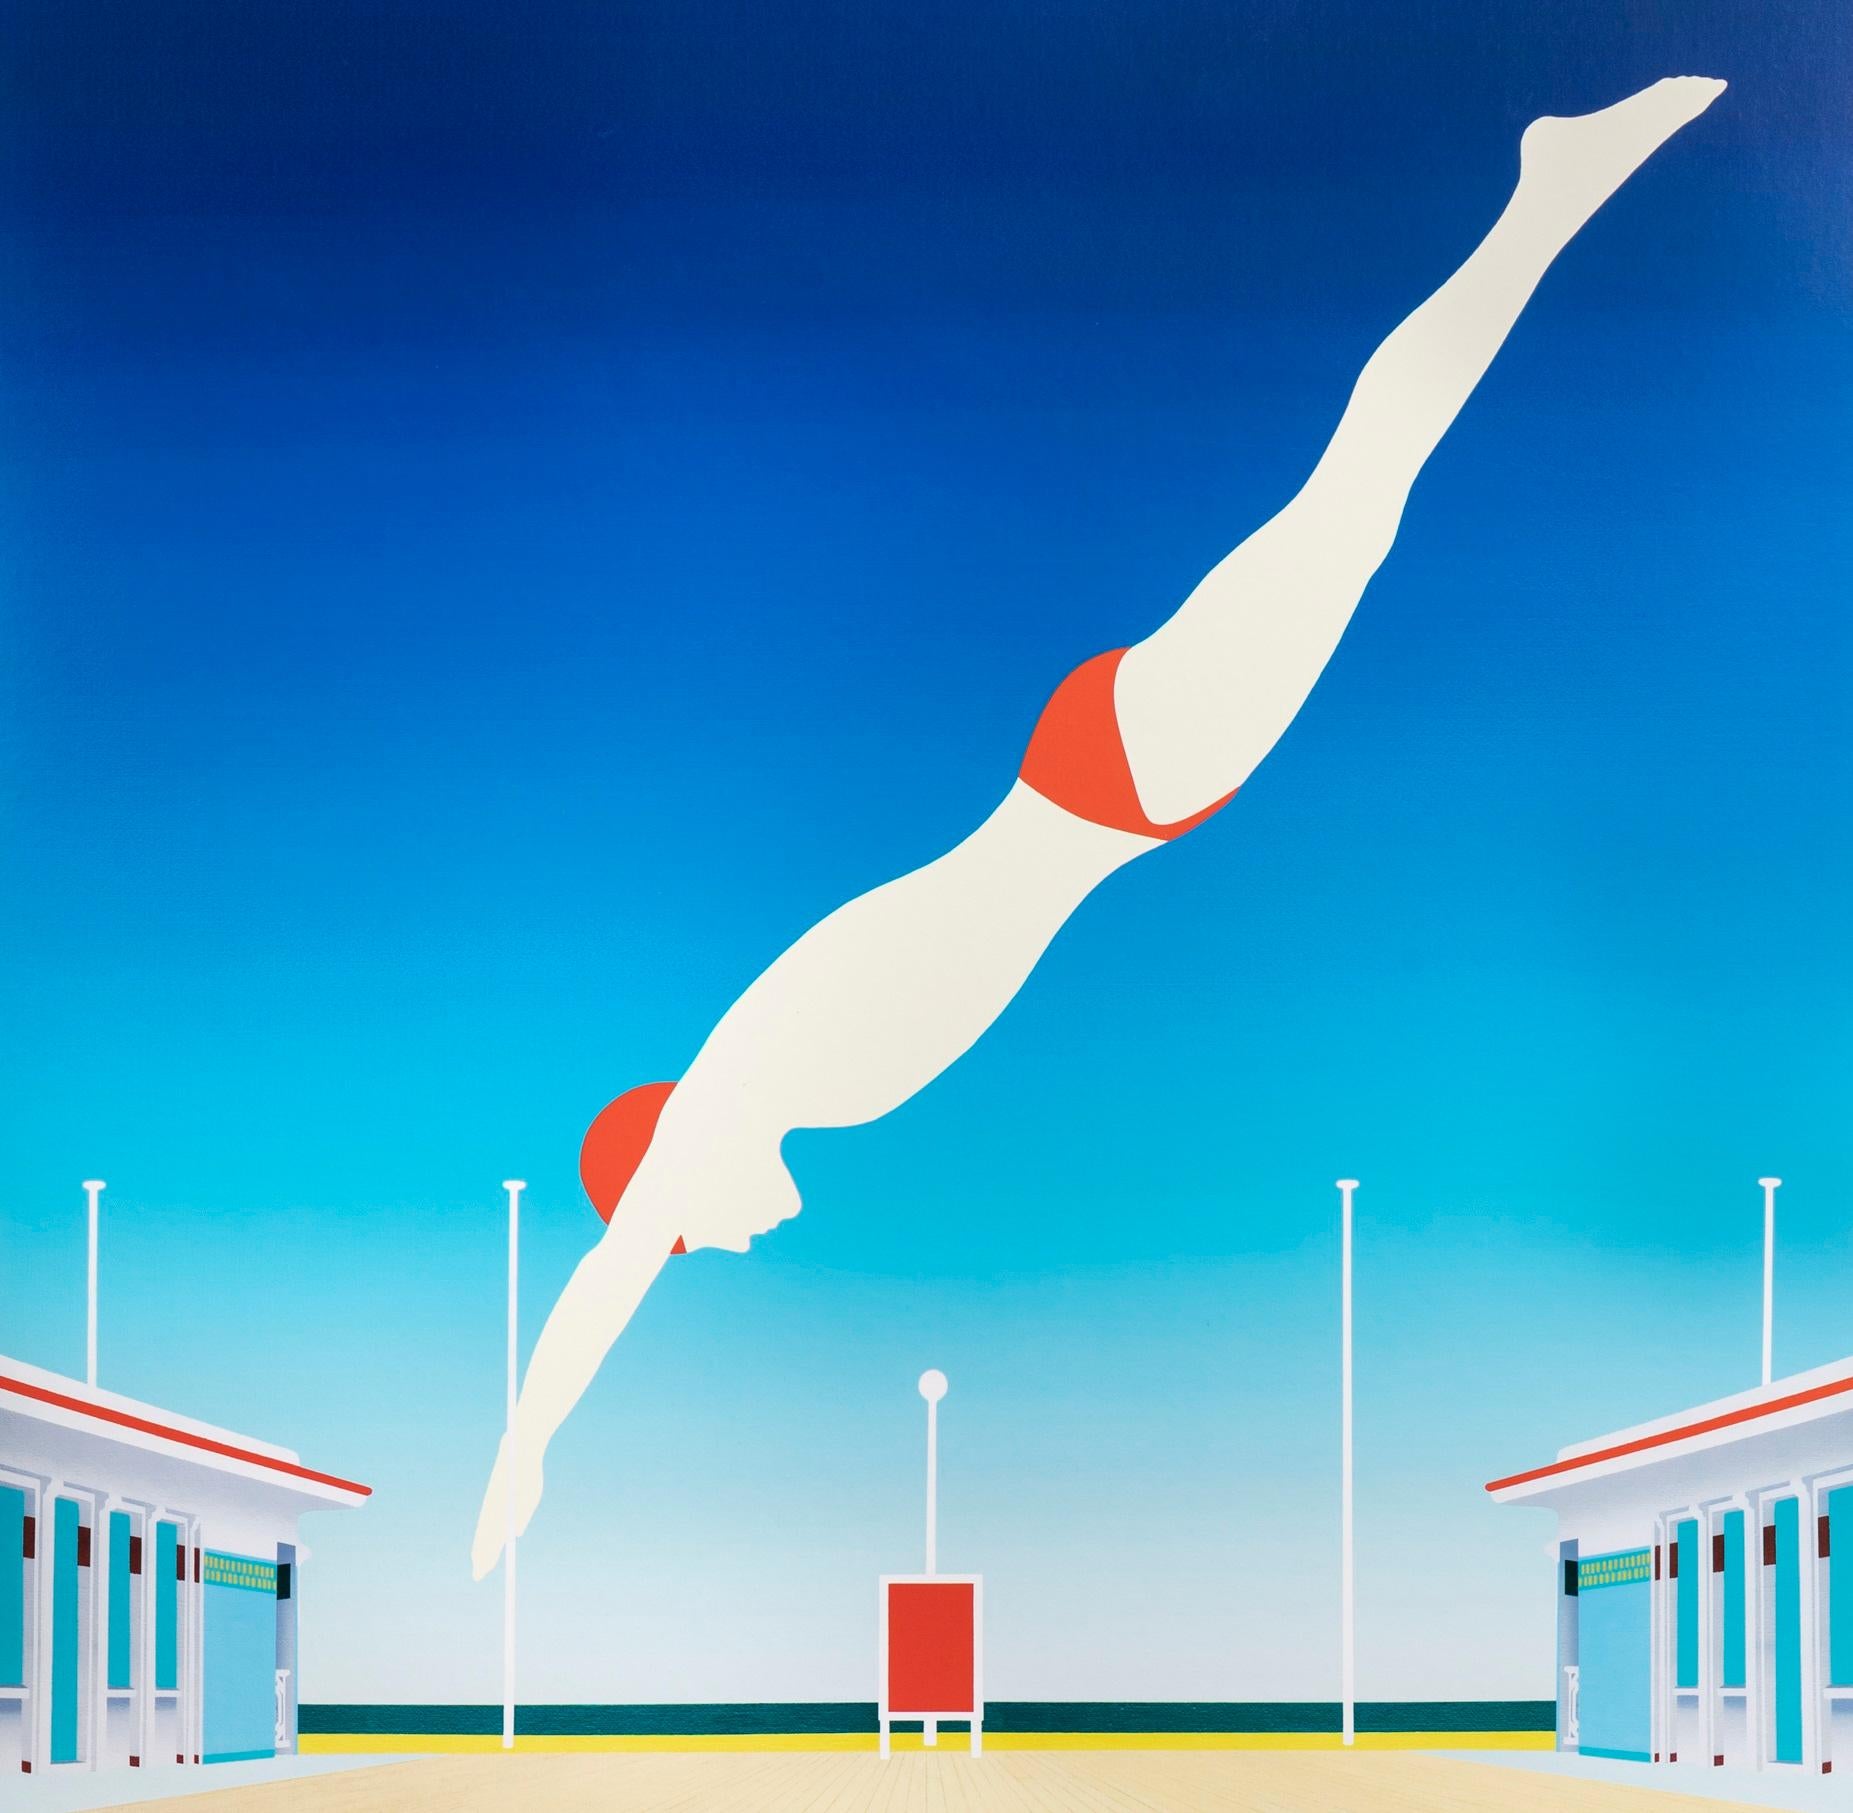 Razzia, Original Poster, Deauville, Normandy, Beach, Movies Festival, 1983

Artist: Razzia
Title: Deauville
Date: 1983
Size (w x h): 41.3 x 58.5 in / 105 x 148.5 cm
Materials and Techniques: Colour lithograph on paper
Linen backing: